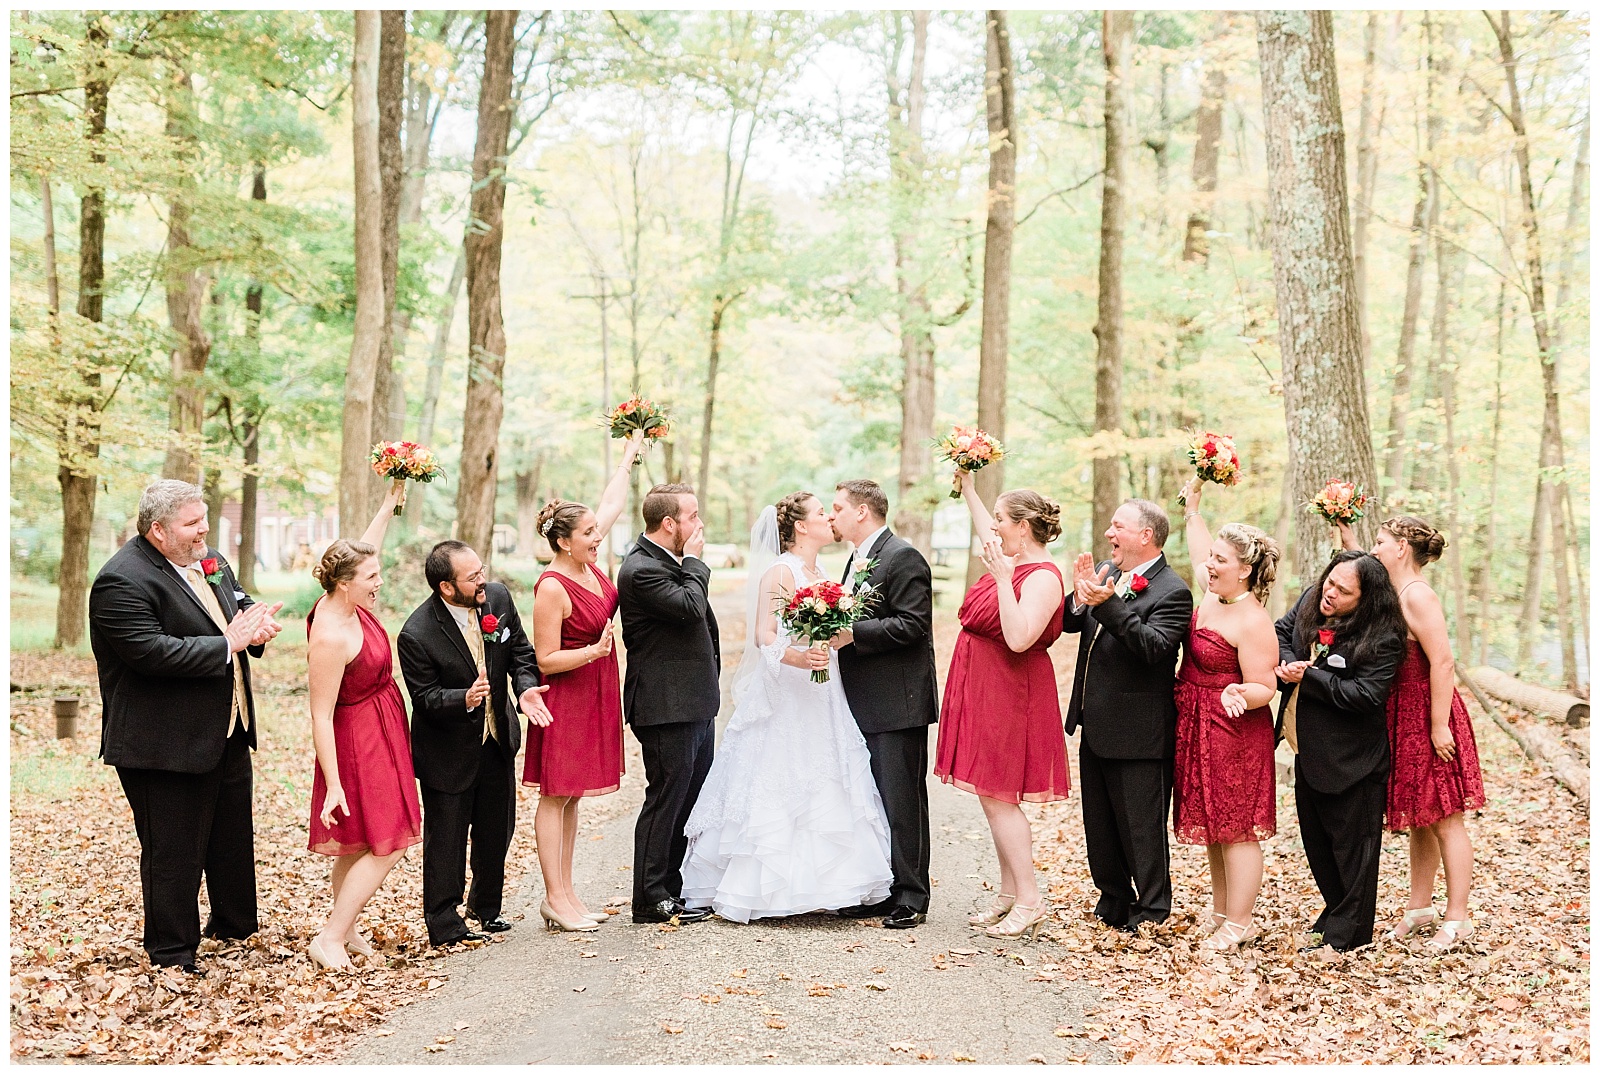 Autumn,David's Country Inn,Fall Wedding,Forest,Hackettstown,NJ Wedding Photographer,Wedding Party,Woods,